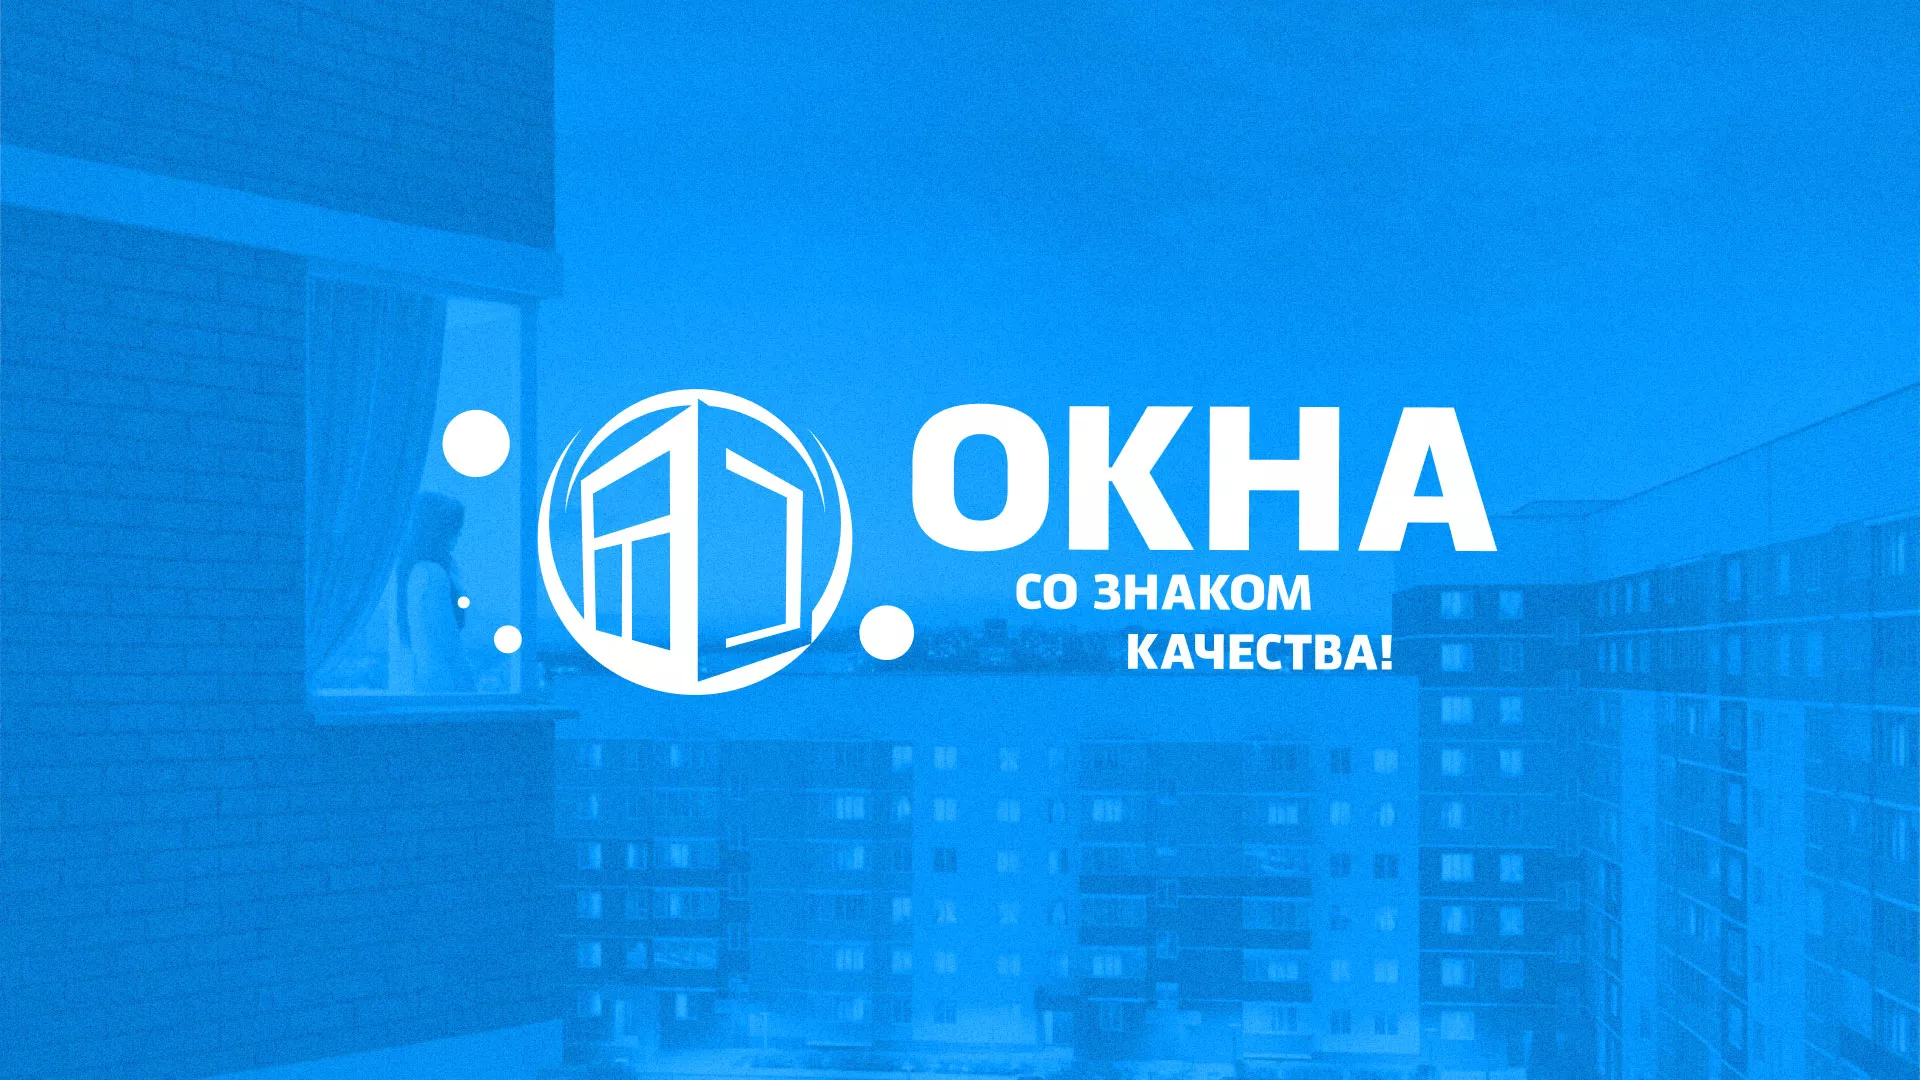 Создание сайта компании «Окна ВИДО» в Шадринске